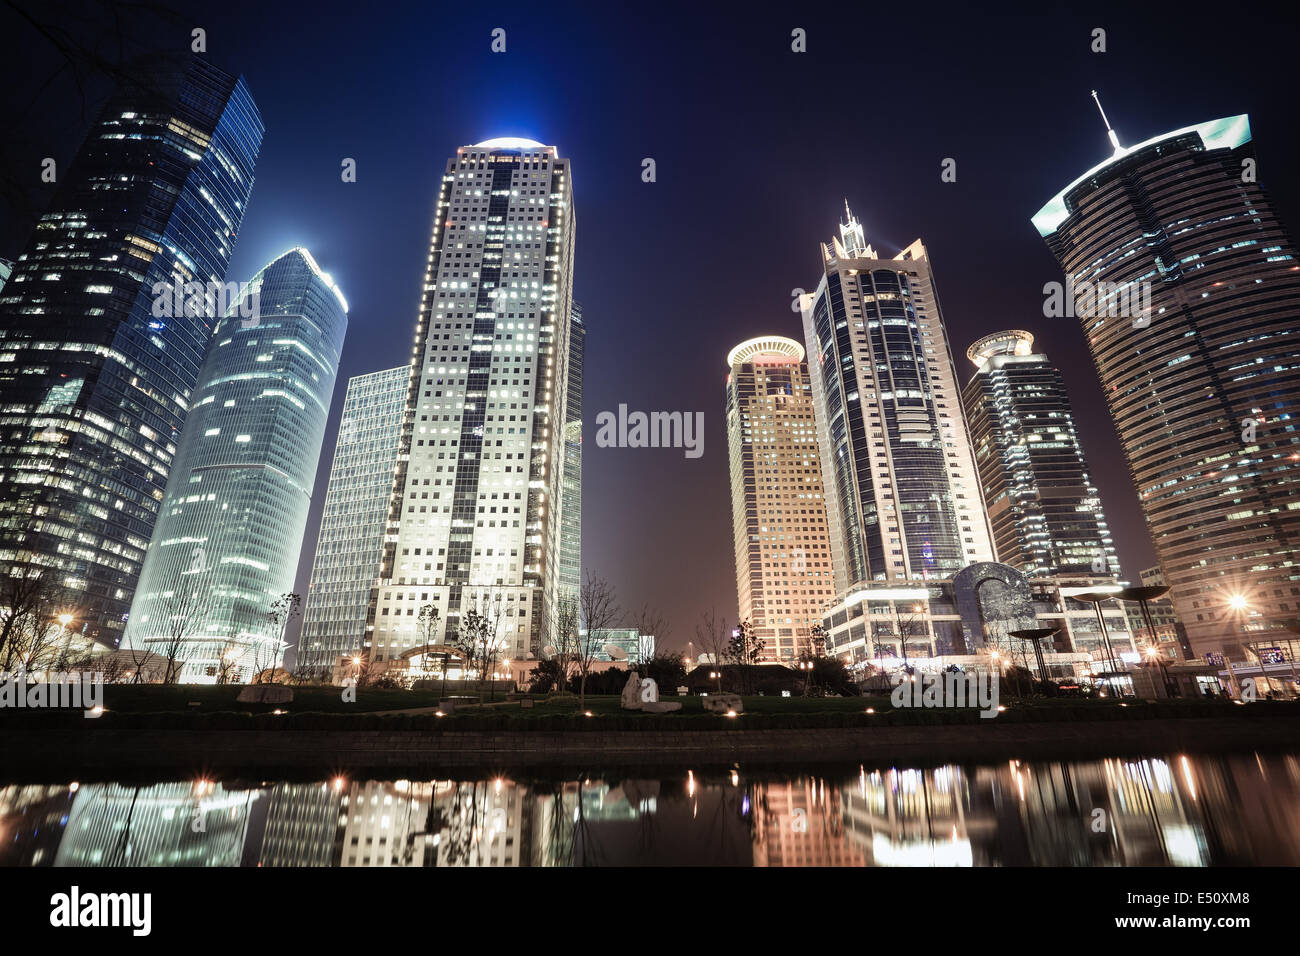 night scenes of shanghai financial center Stock Photo